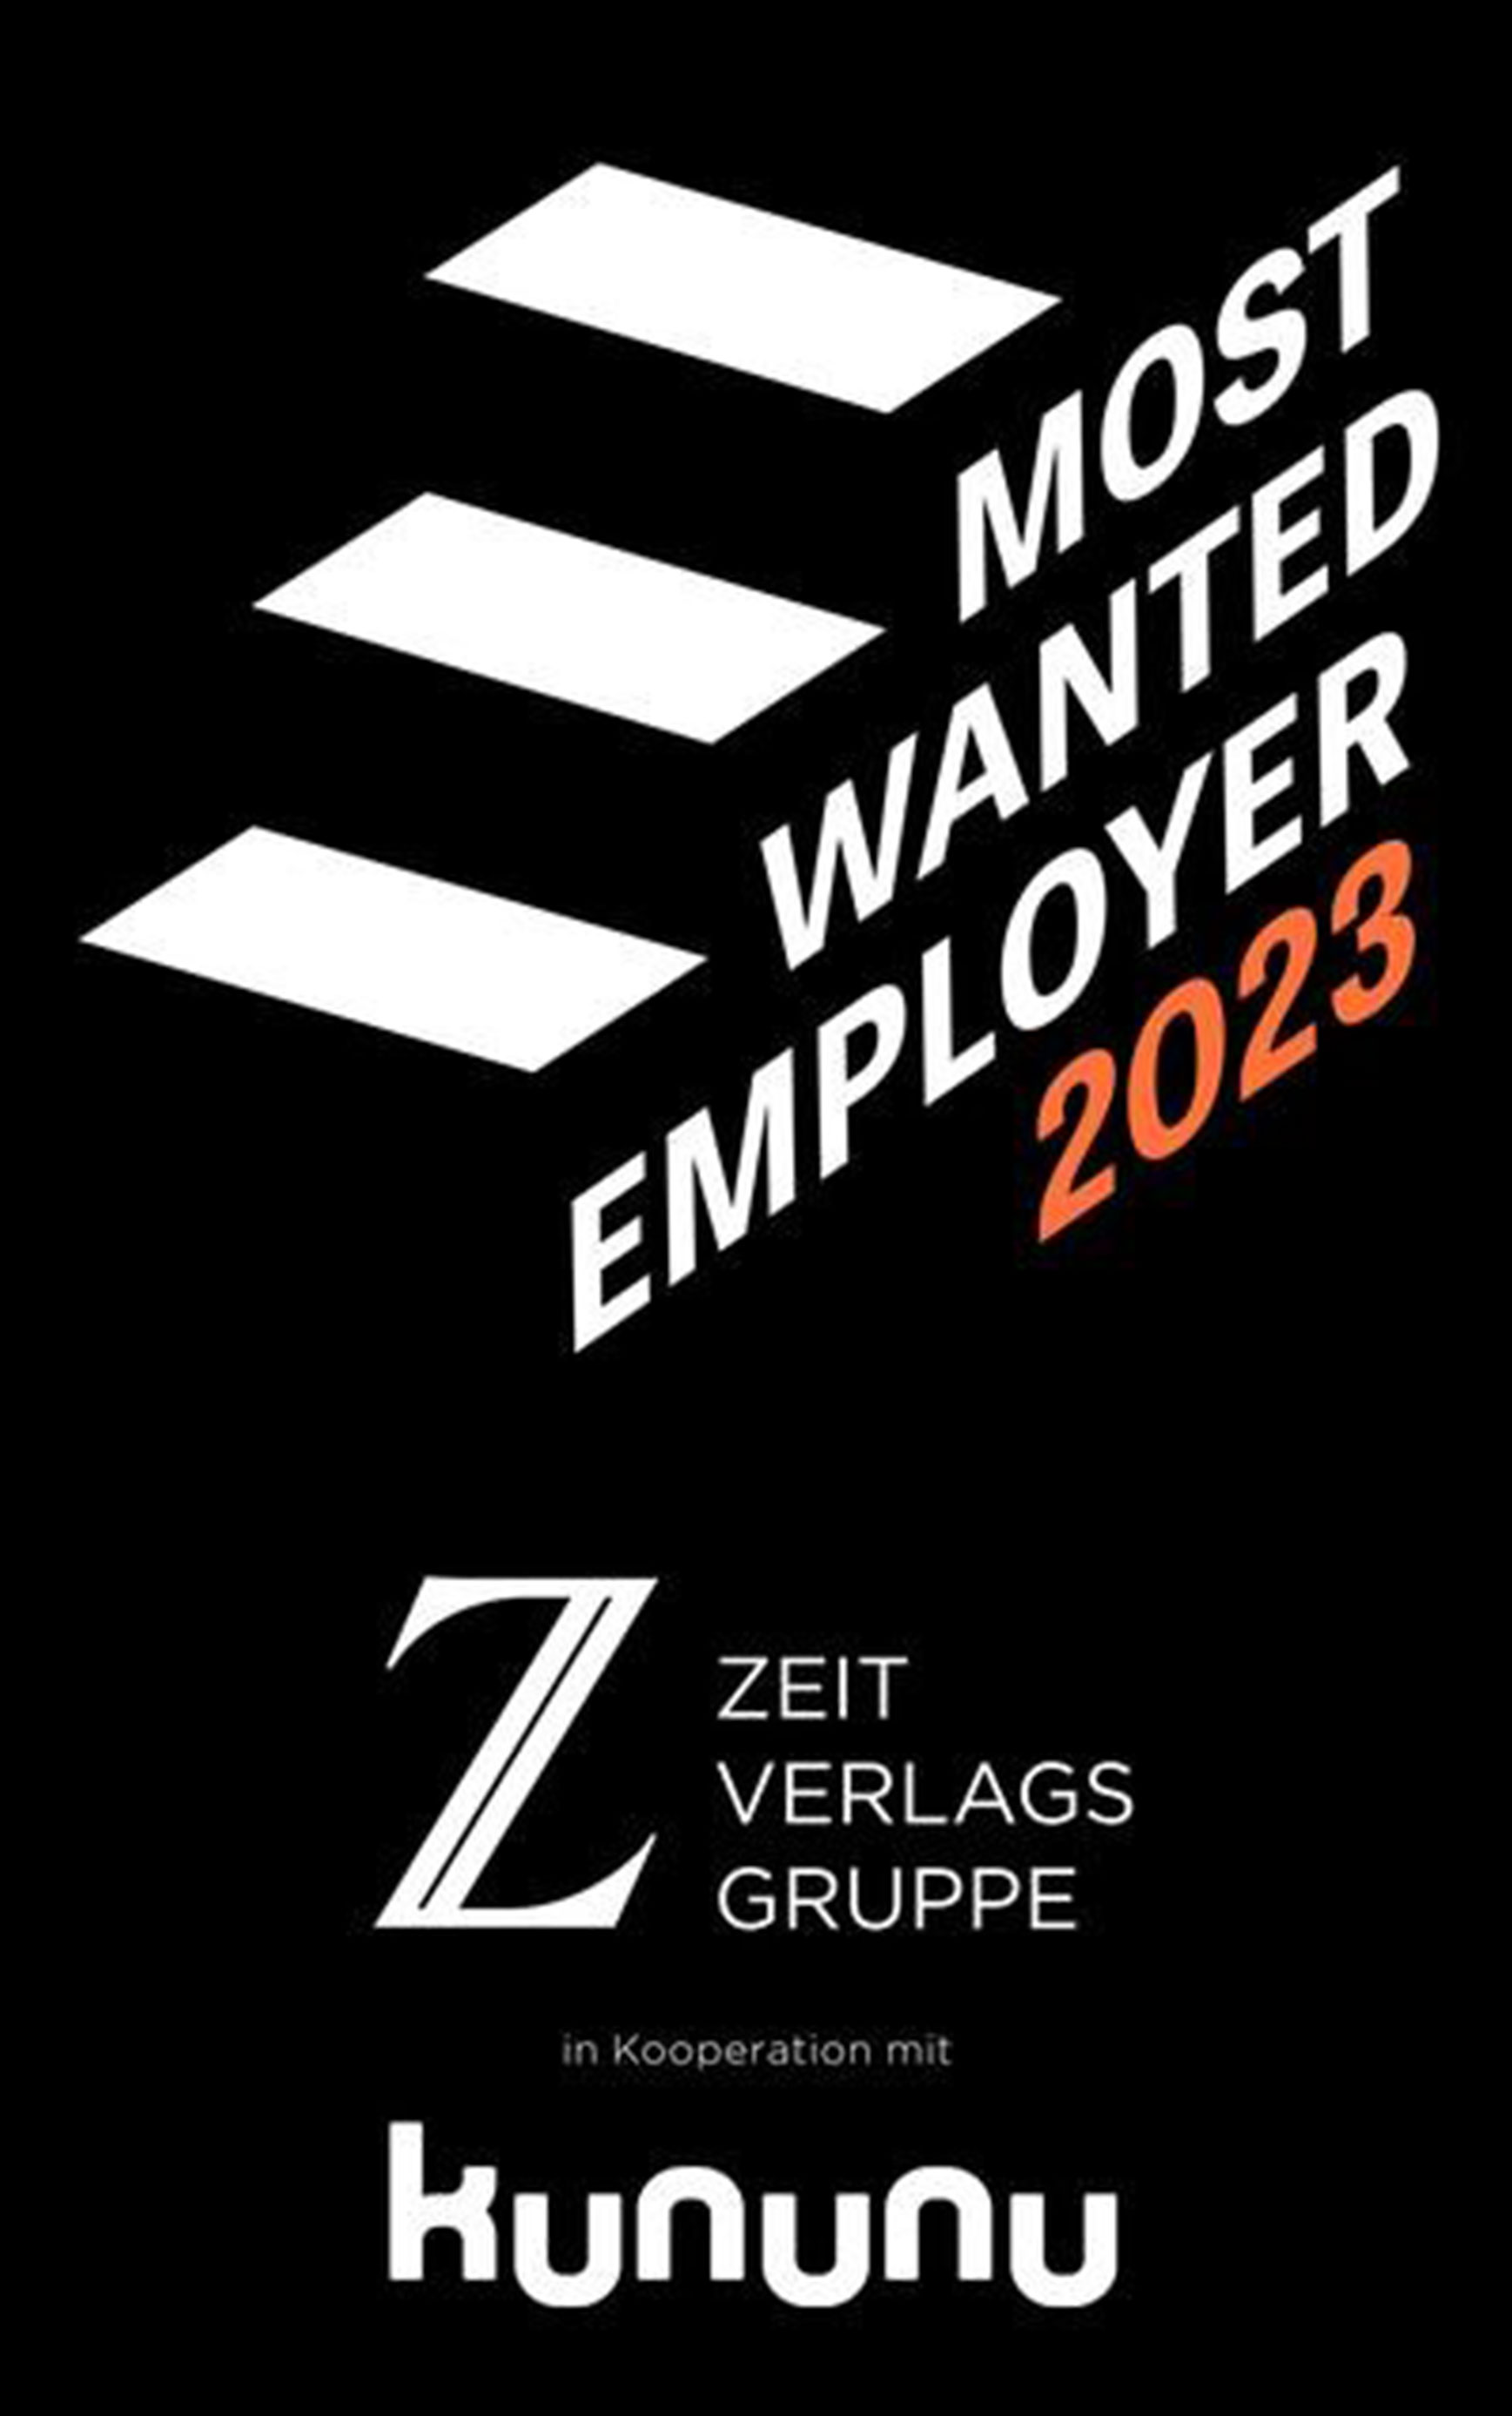 kununu Most Wanted Employer 2023